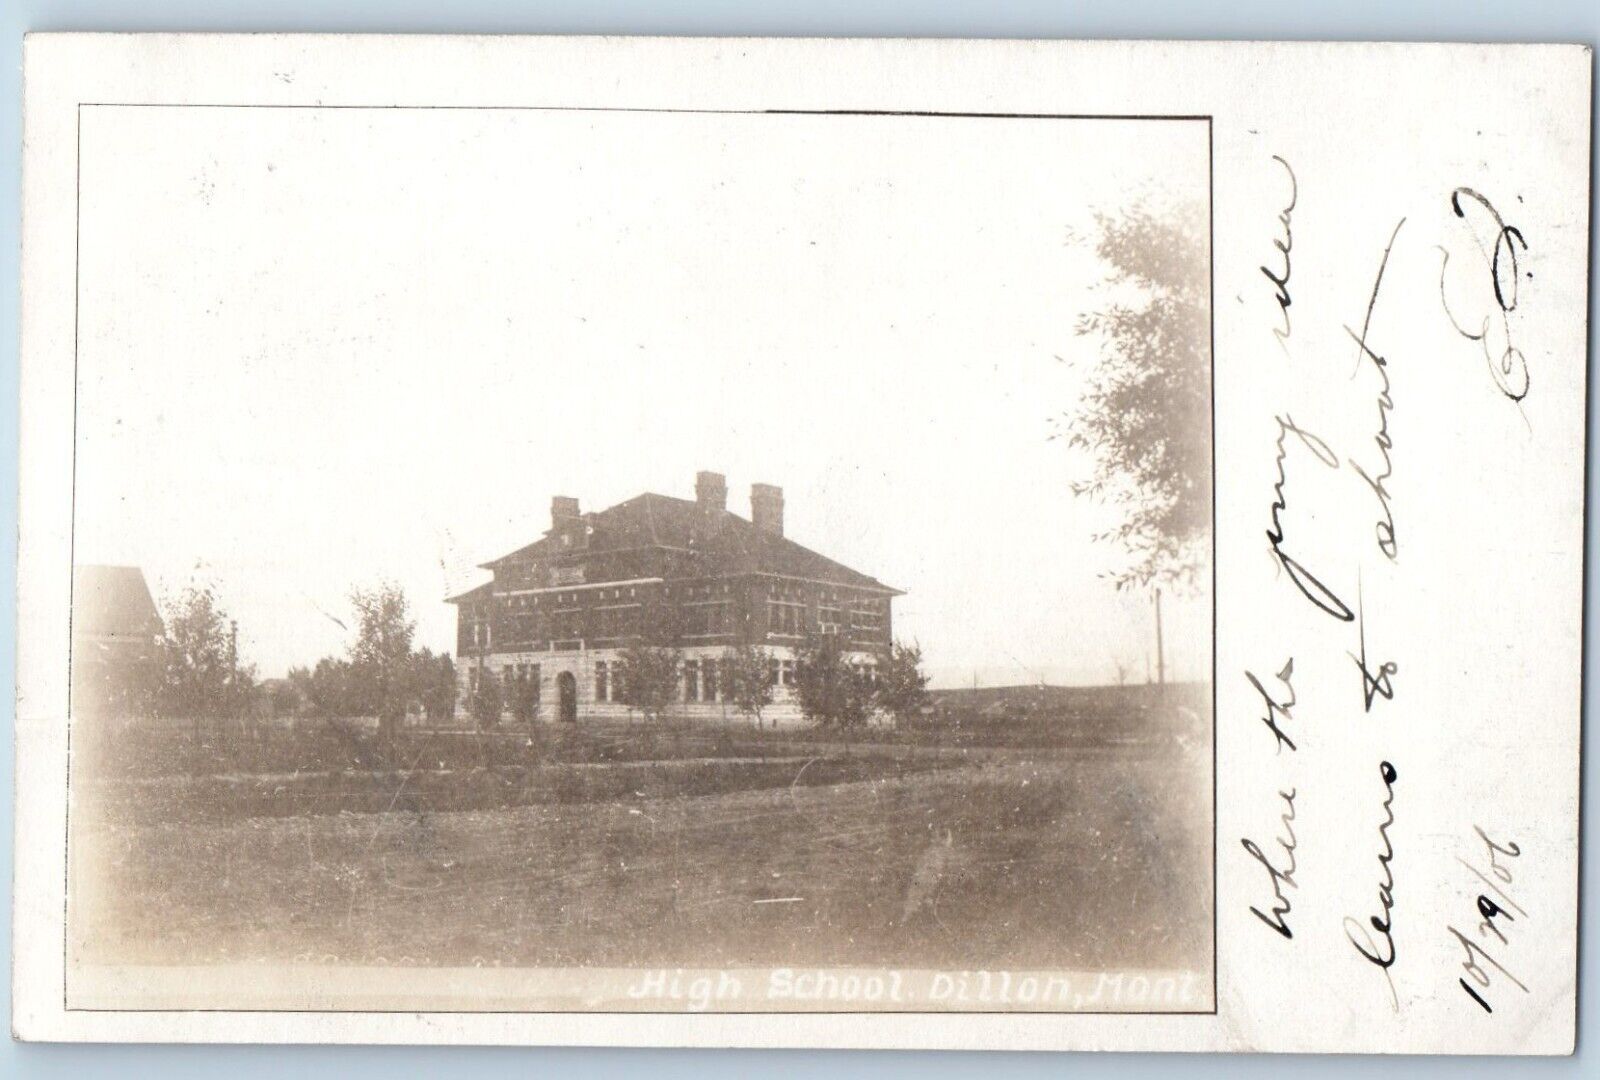 Dillon Montana MT Postcard RPPC Photo High School Building Campus 1906 Antique